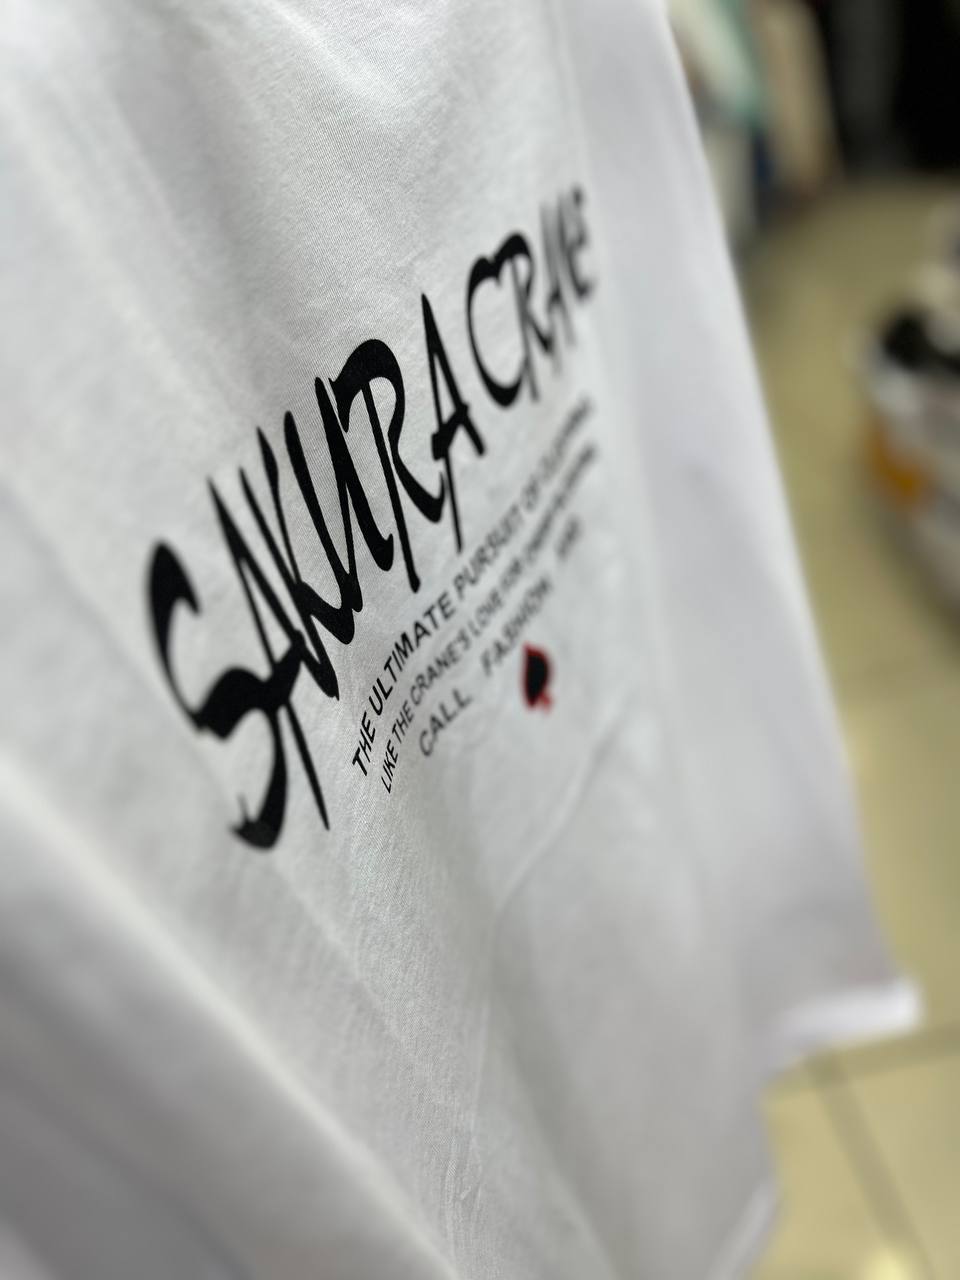 Sakura crane t-shirt